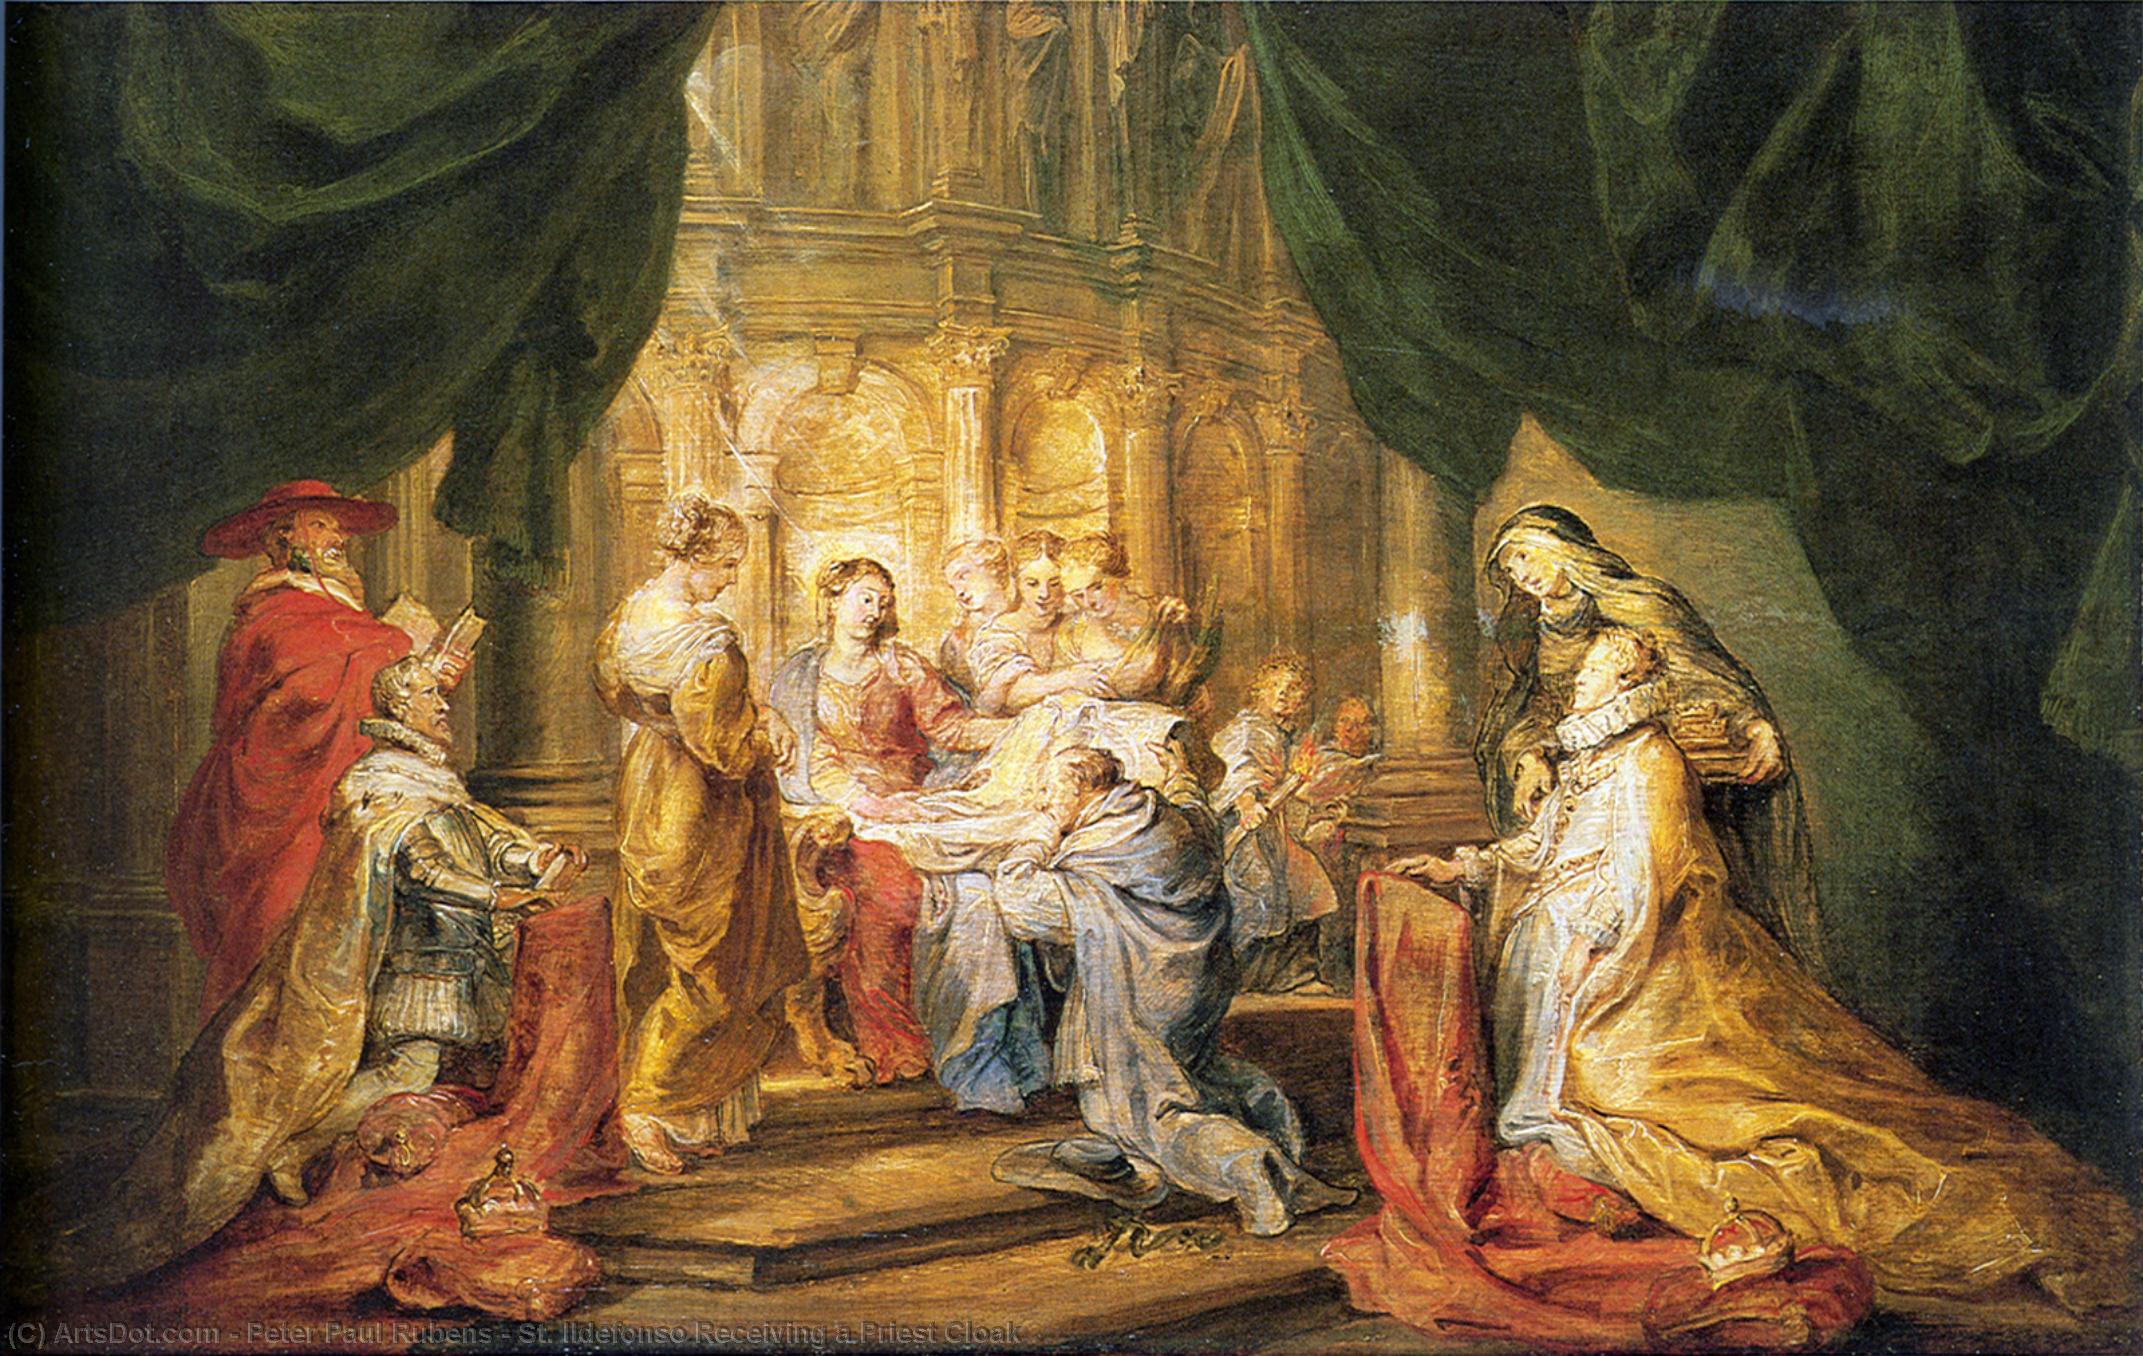 WikiOO.org - Güzel Sanatlar Ansiklopedisi - Resim, Resimler Peter Paul Rubens - St. Ildefonso Receiving a Priest Cloak